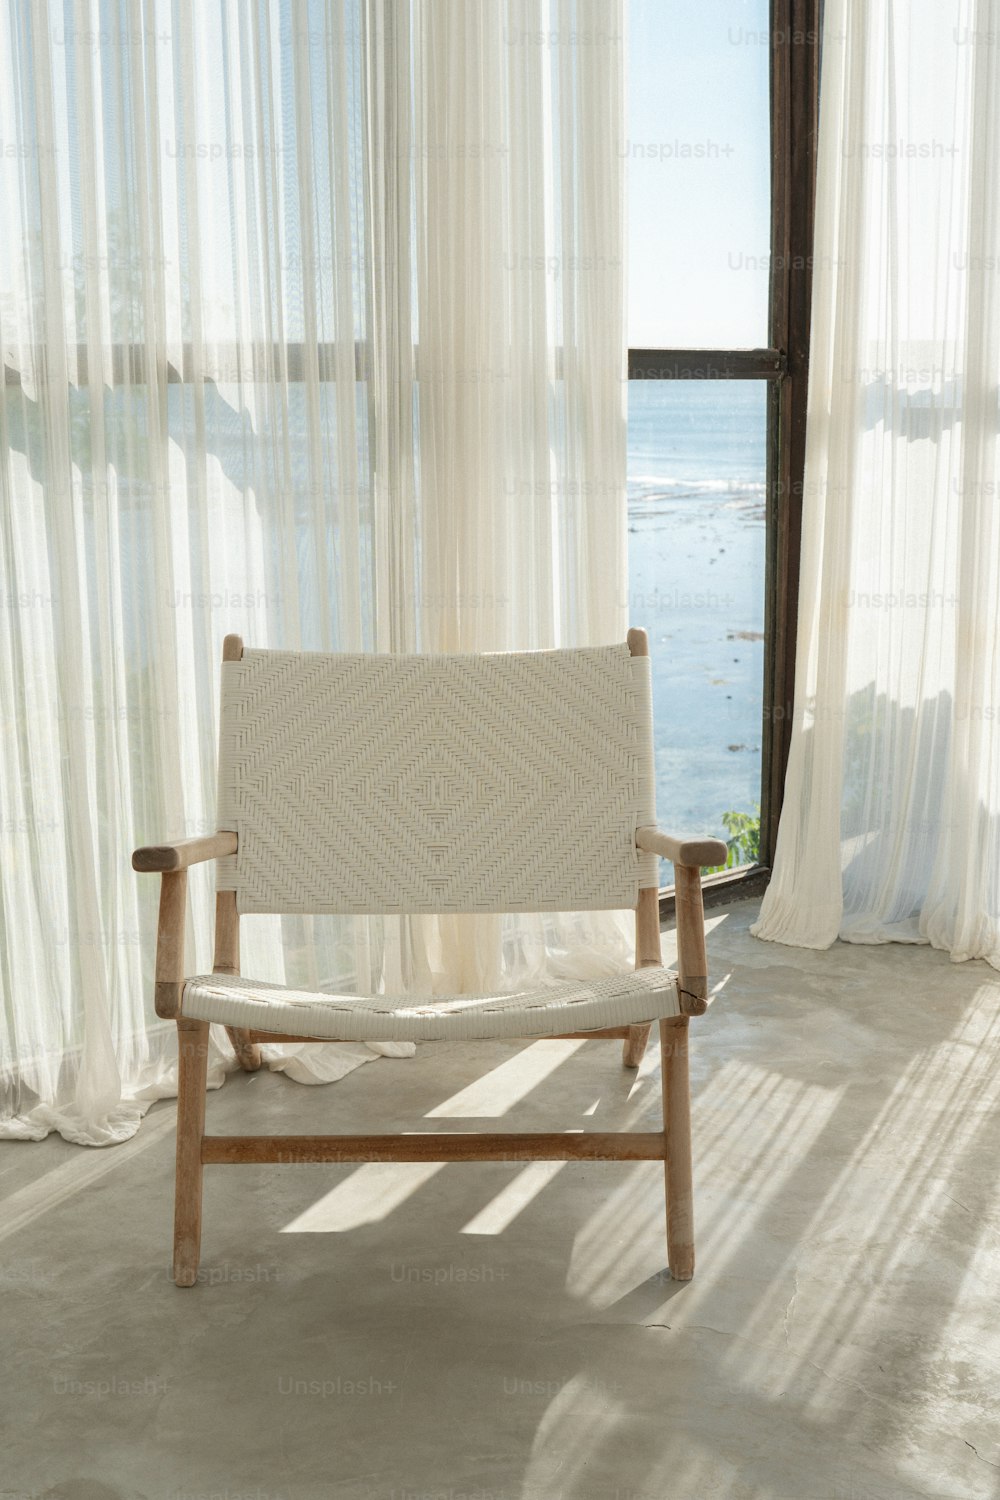 una sedia di legno seduta davanti a una finestra